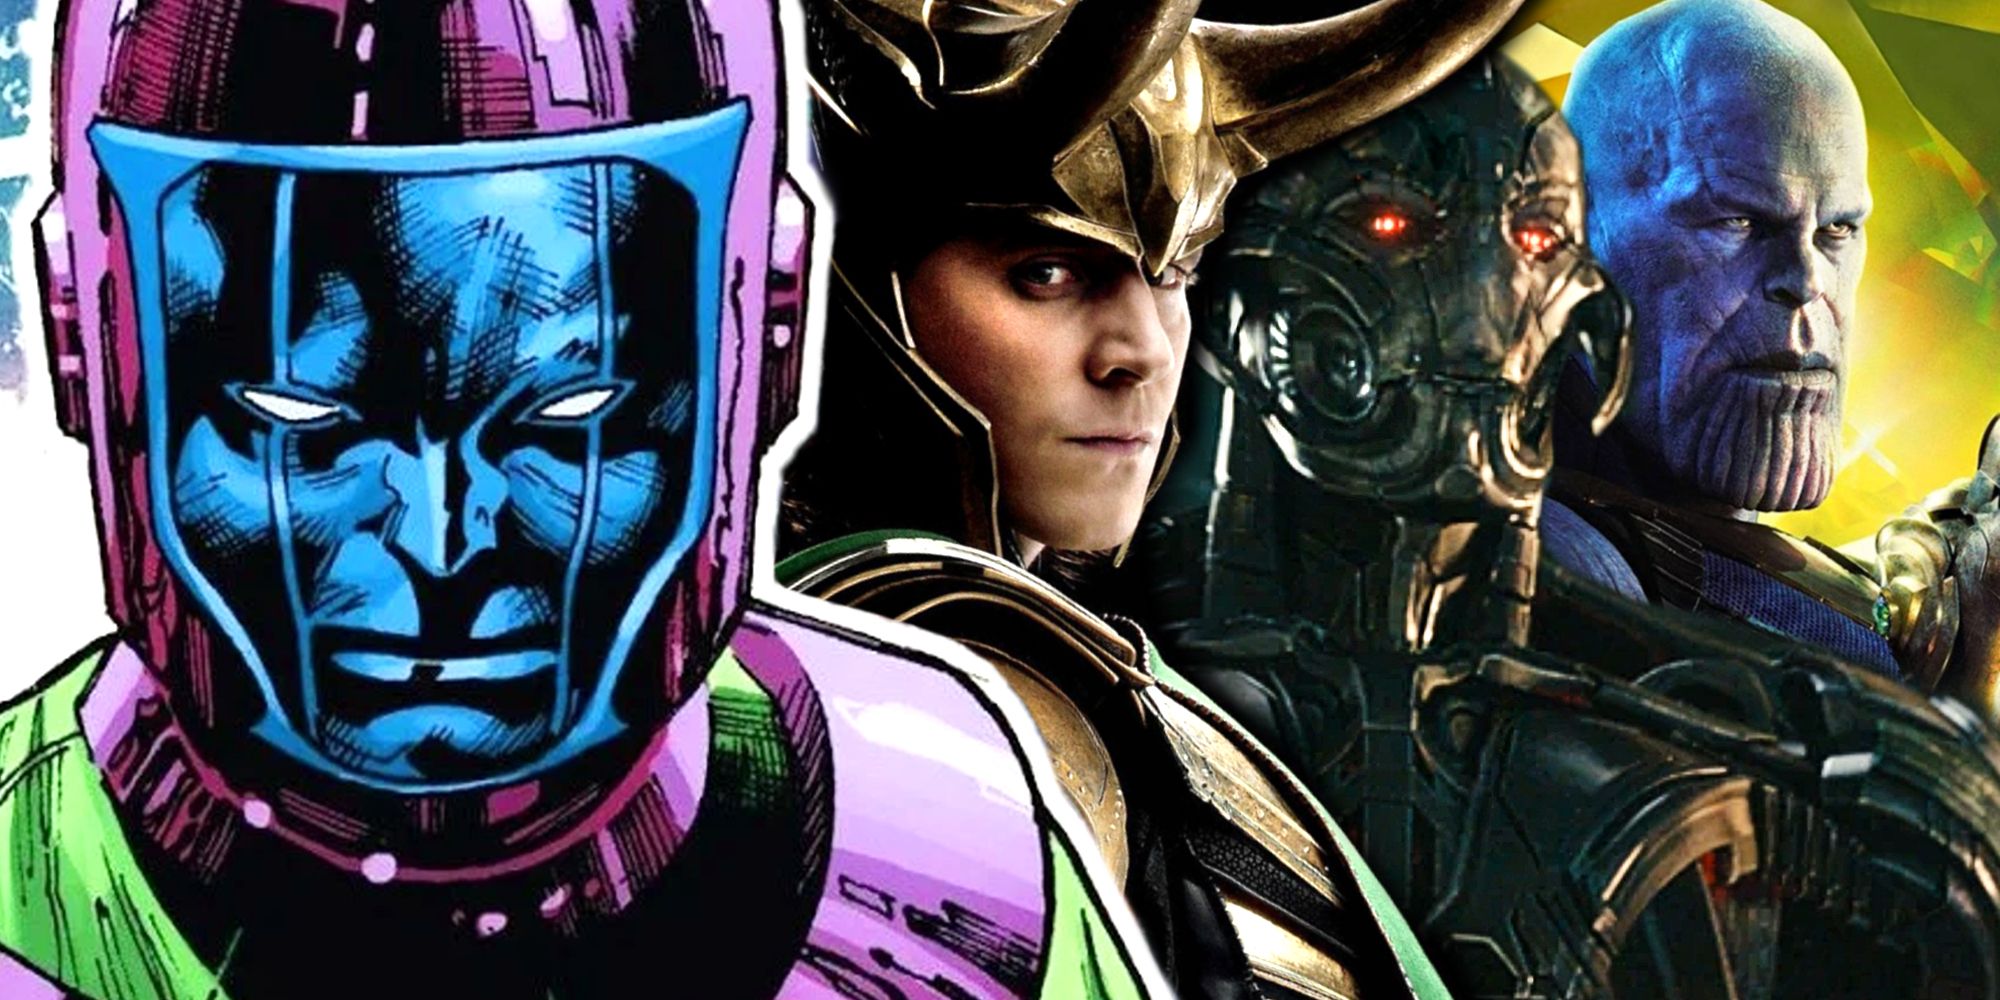 Custom image of MCU Avengers Villains Loki, Ultron, Thanos, and Kang